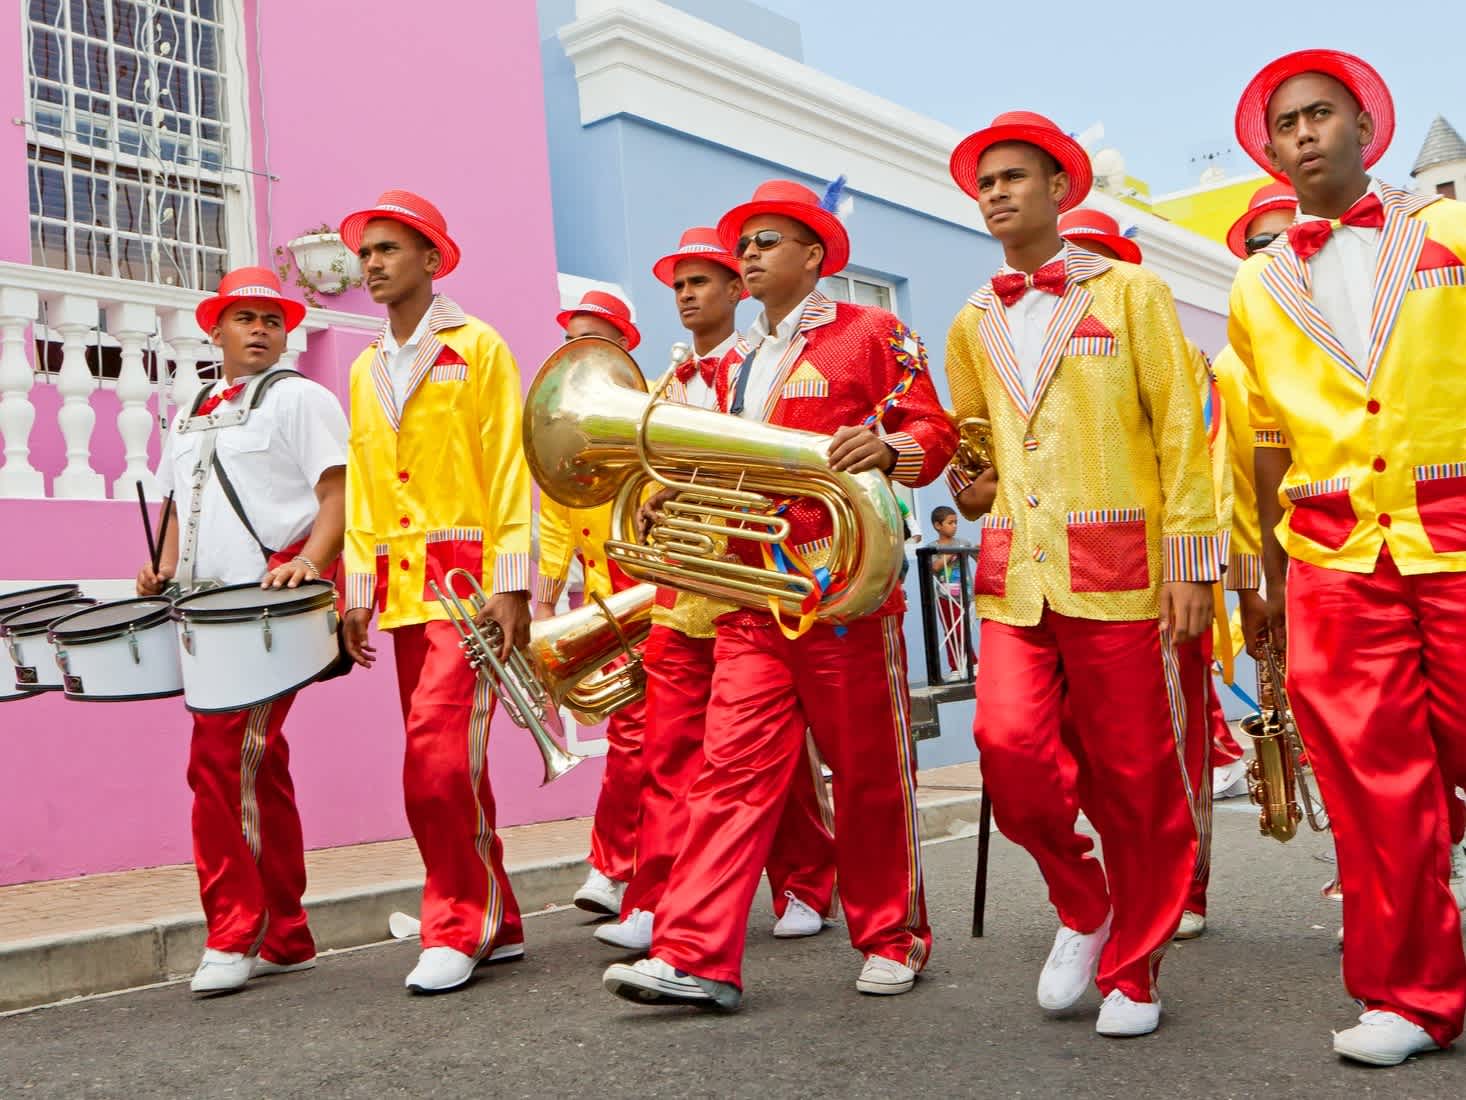 Musikanten in bunten Kostümen vor bunter Häuserfassade